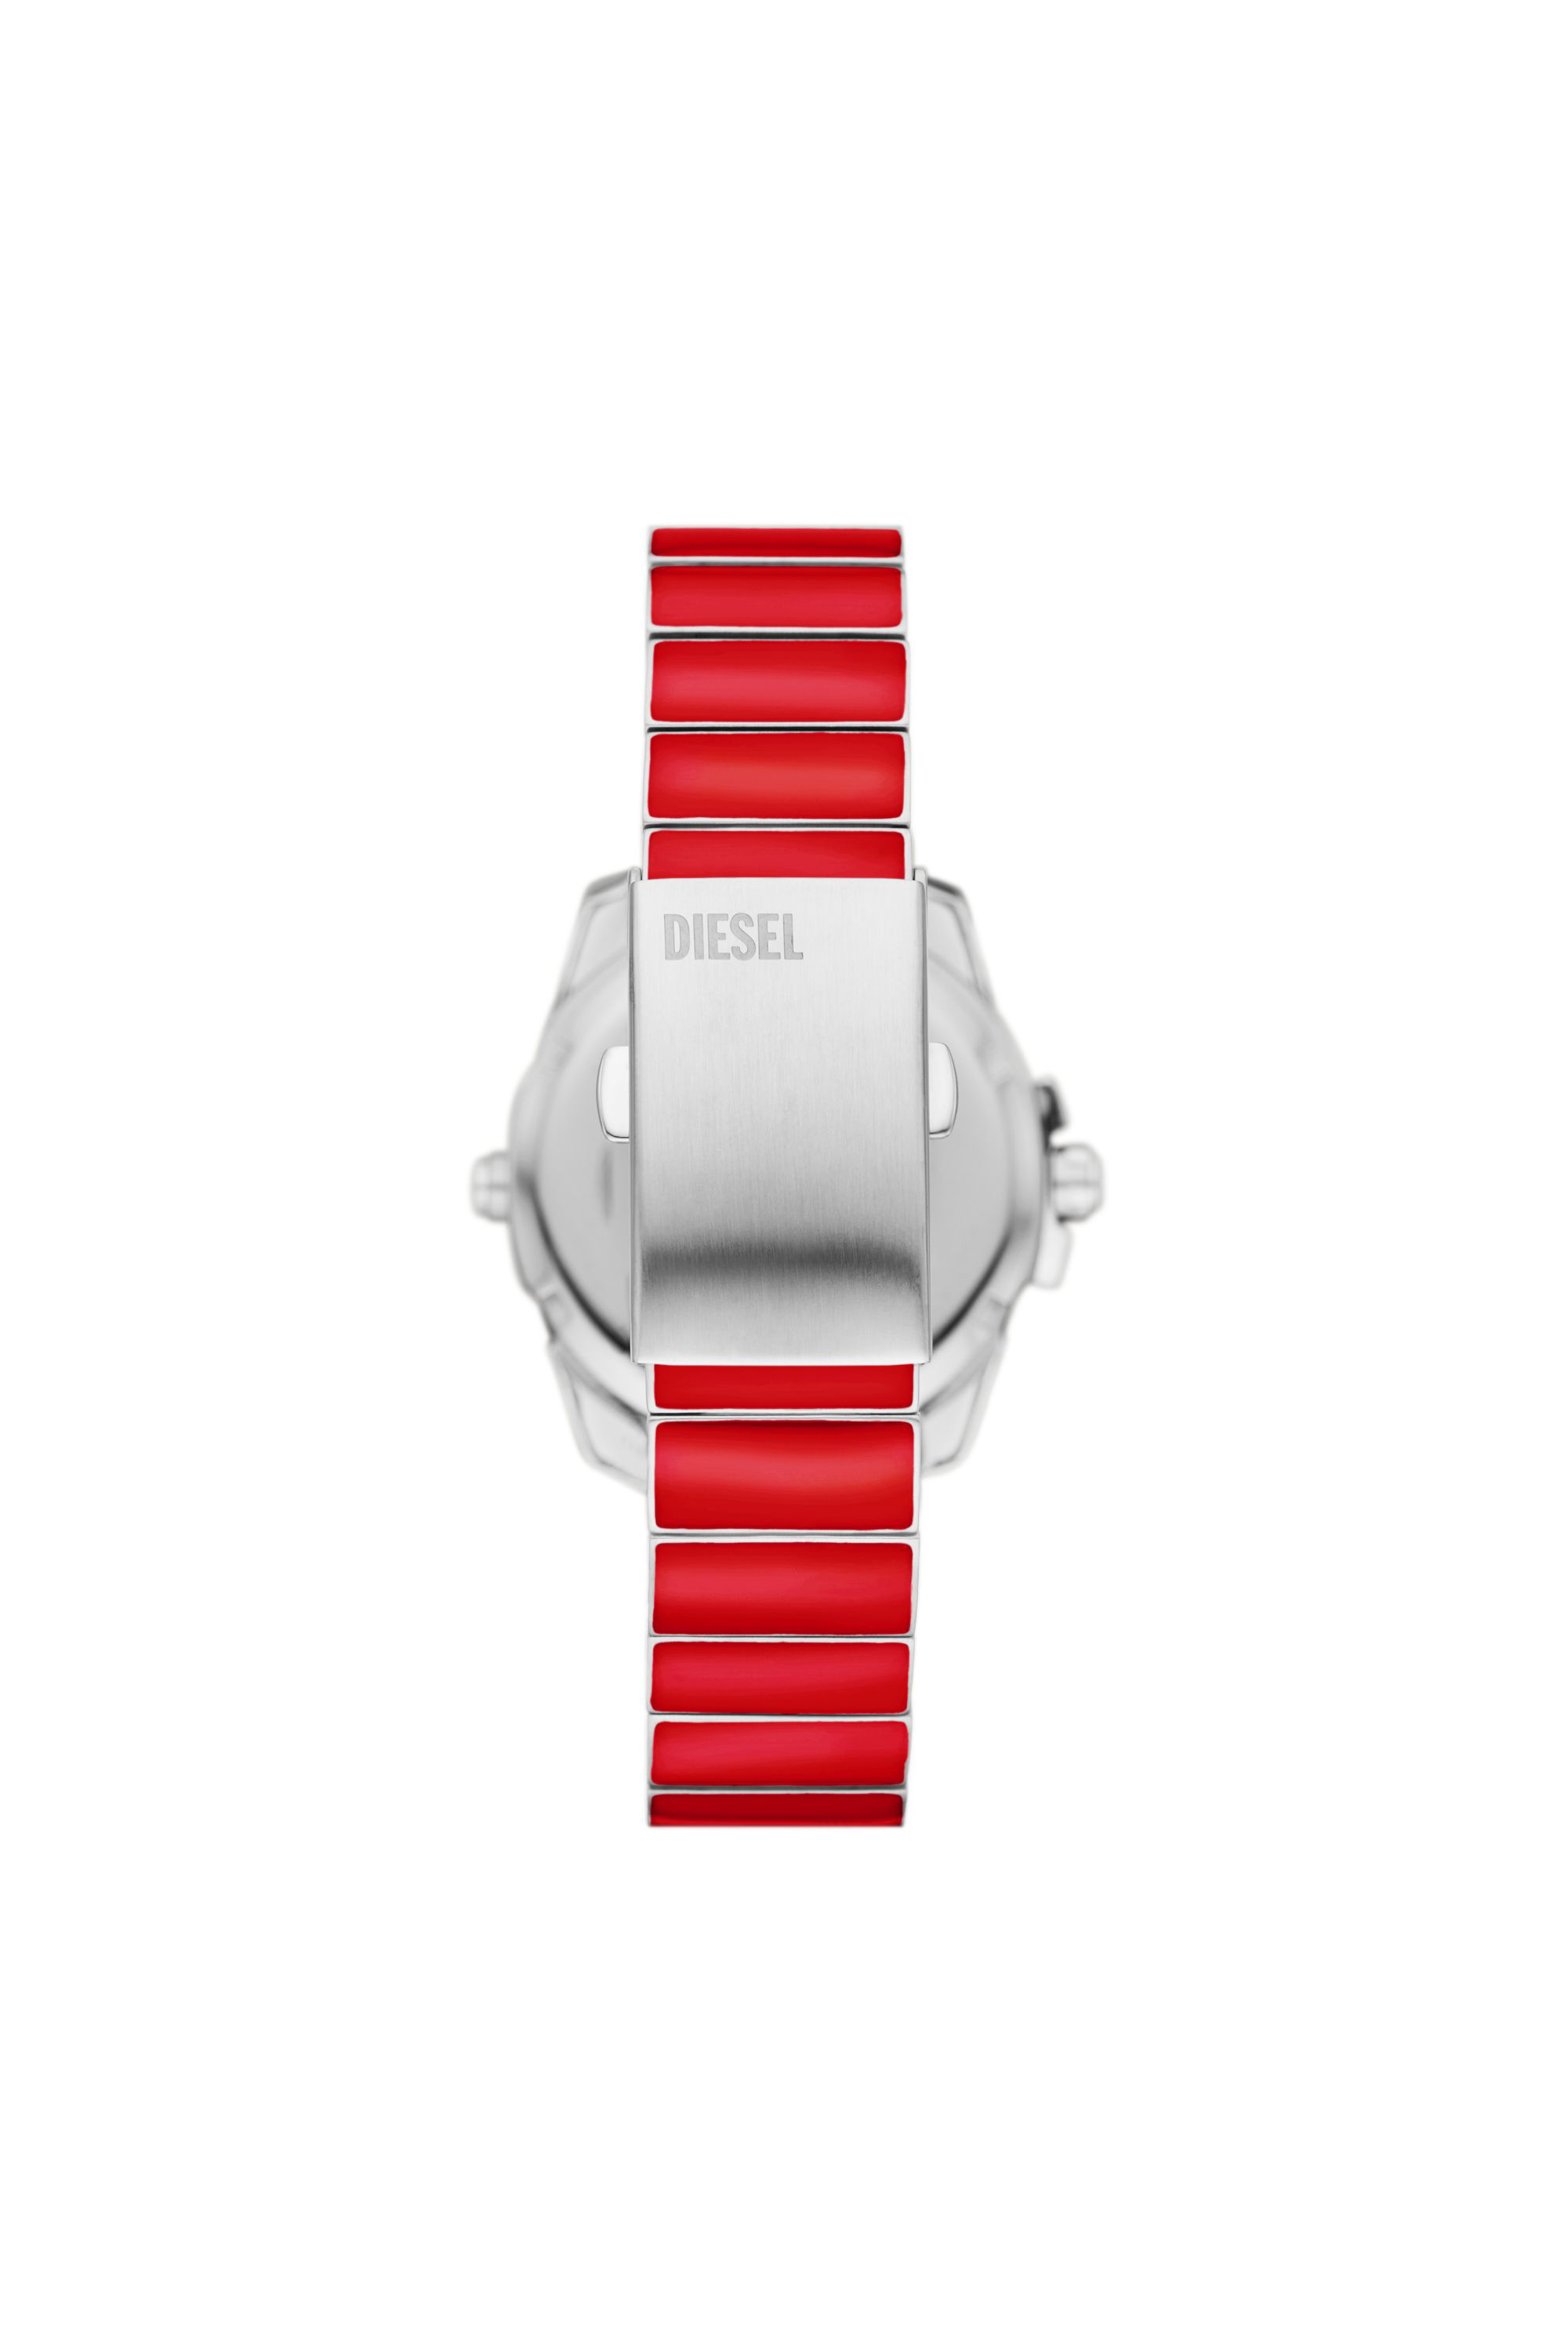 Diesel - DZ2192, Unisex Baby Chief Digital red enamel and stainless steel watch in Red - Image 2